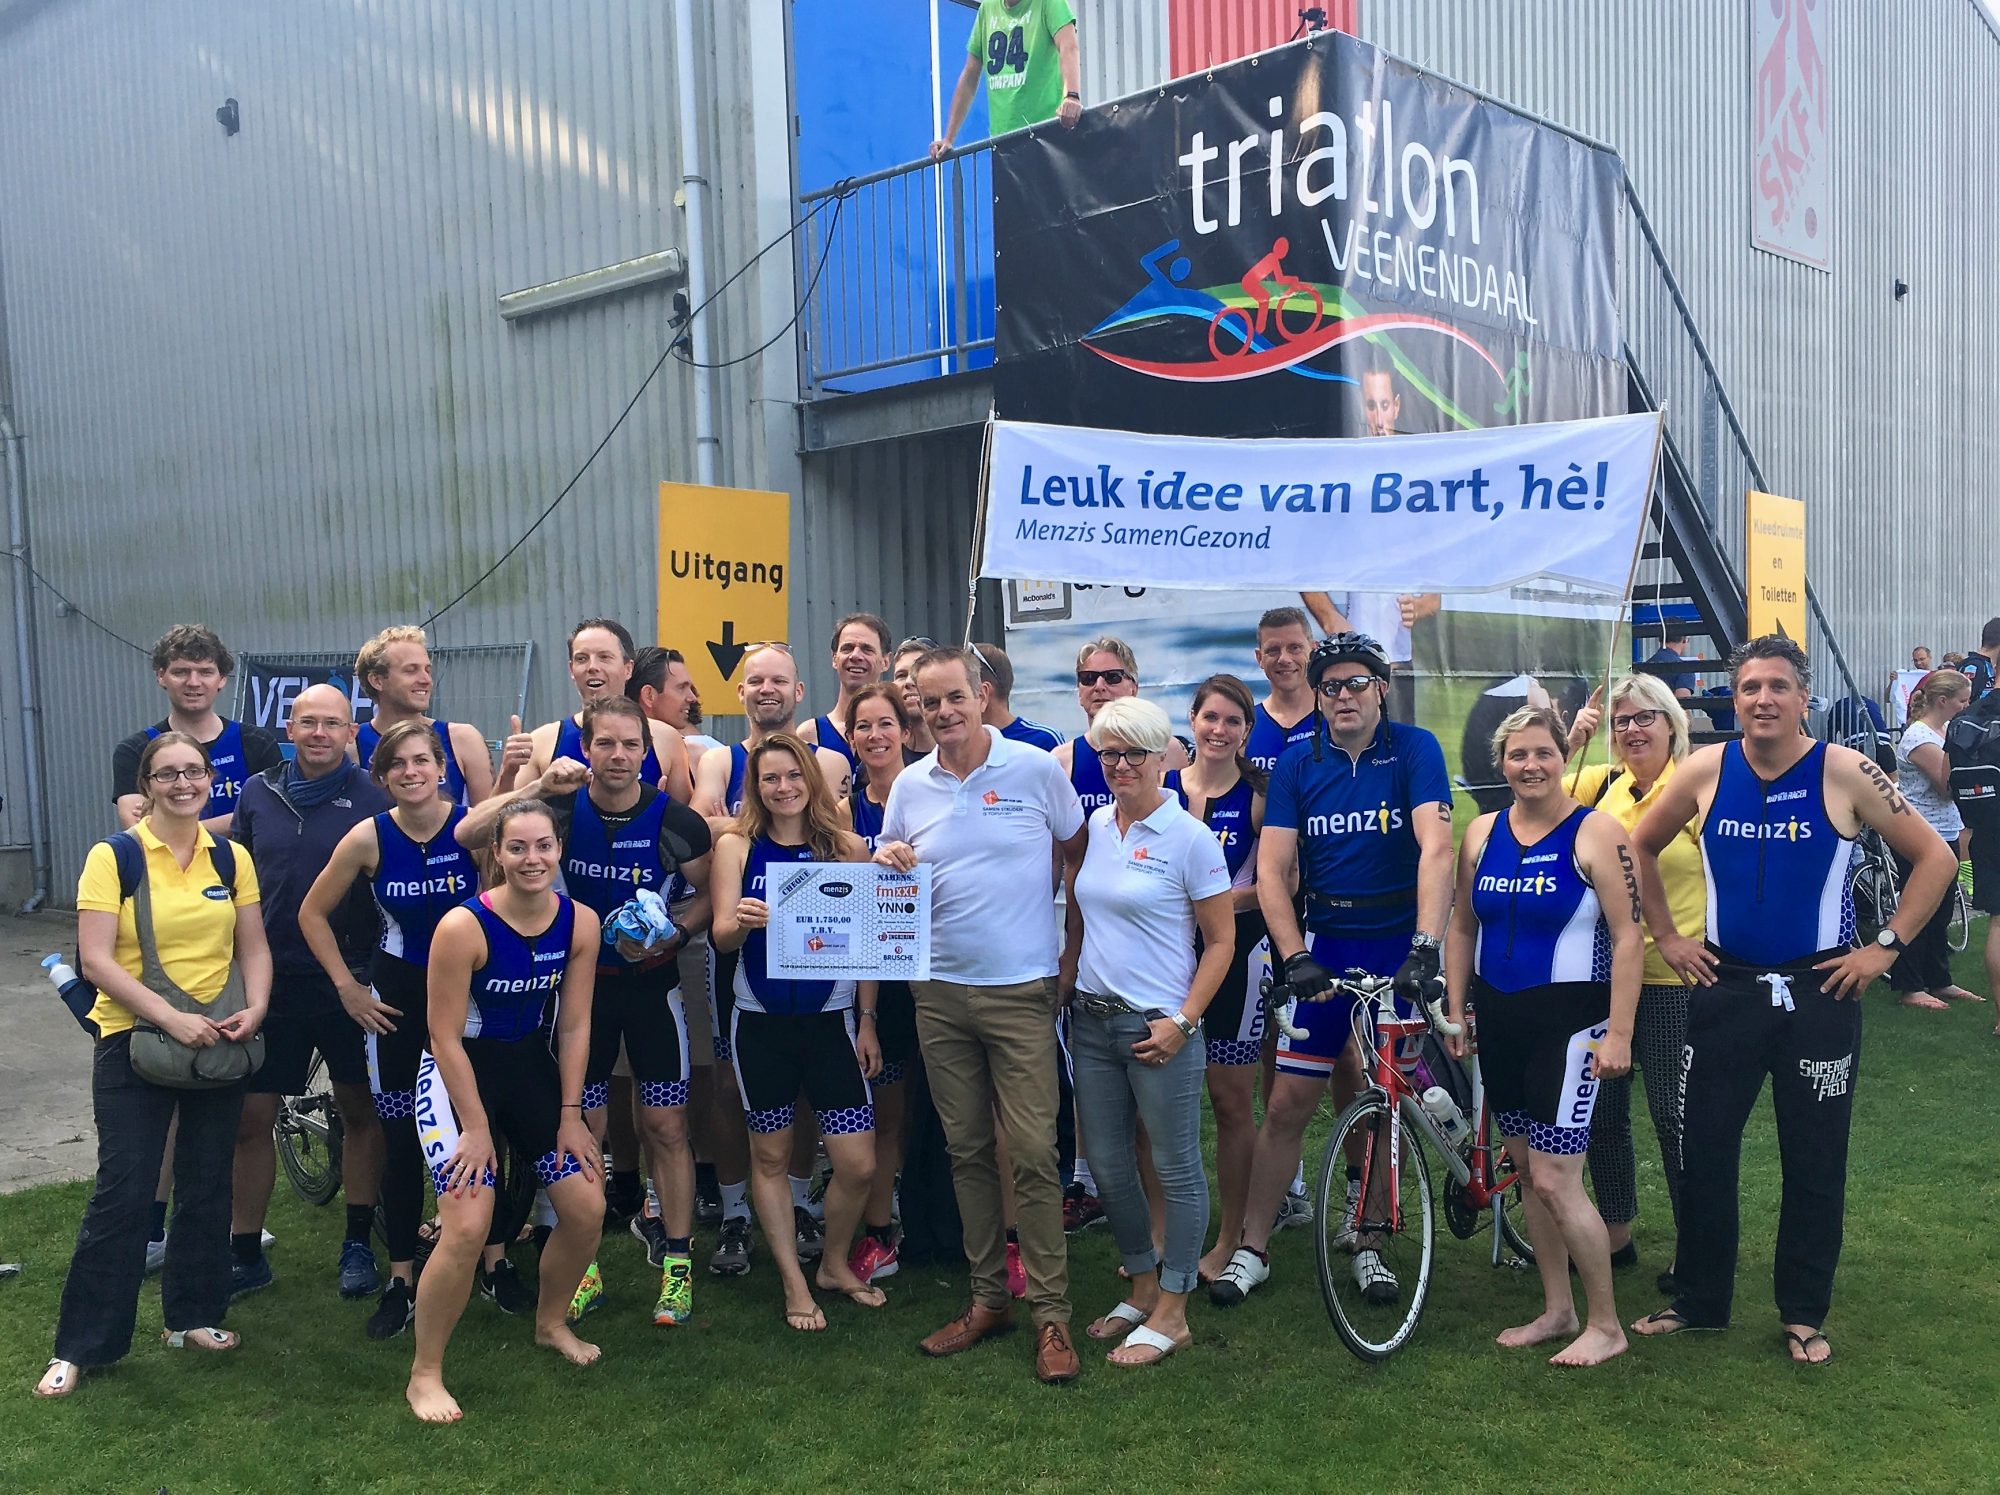 Topsport for Life - Triathlon Veenendaal 2017